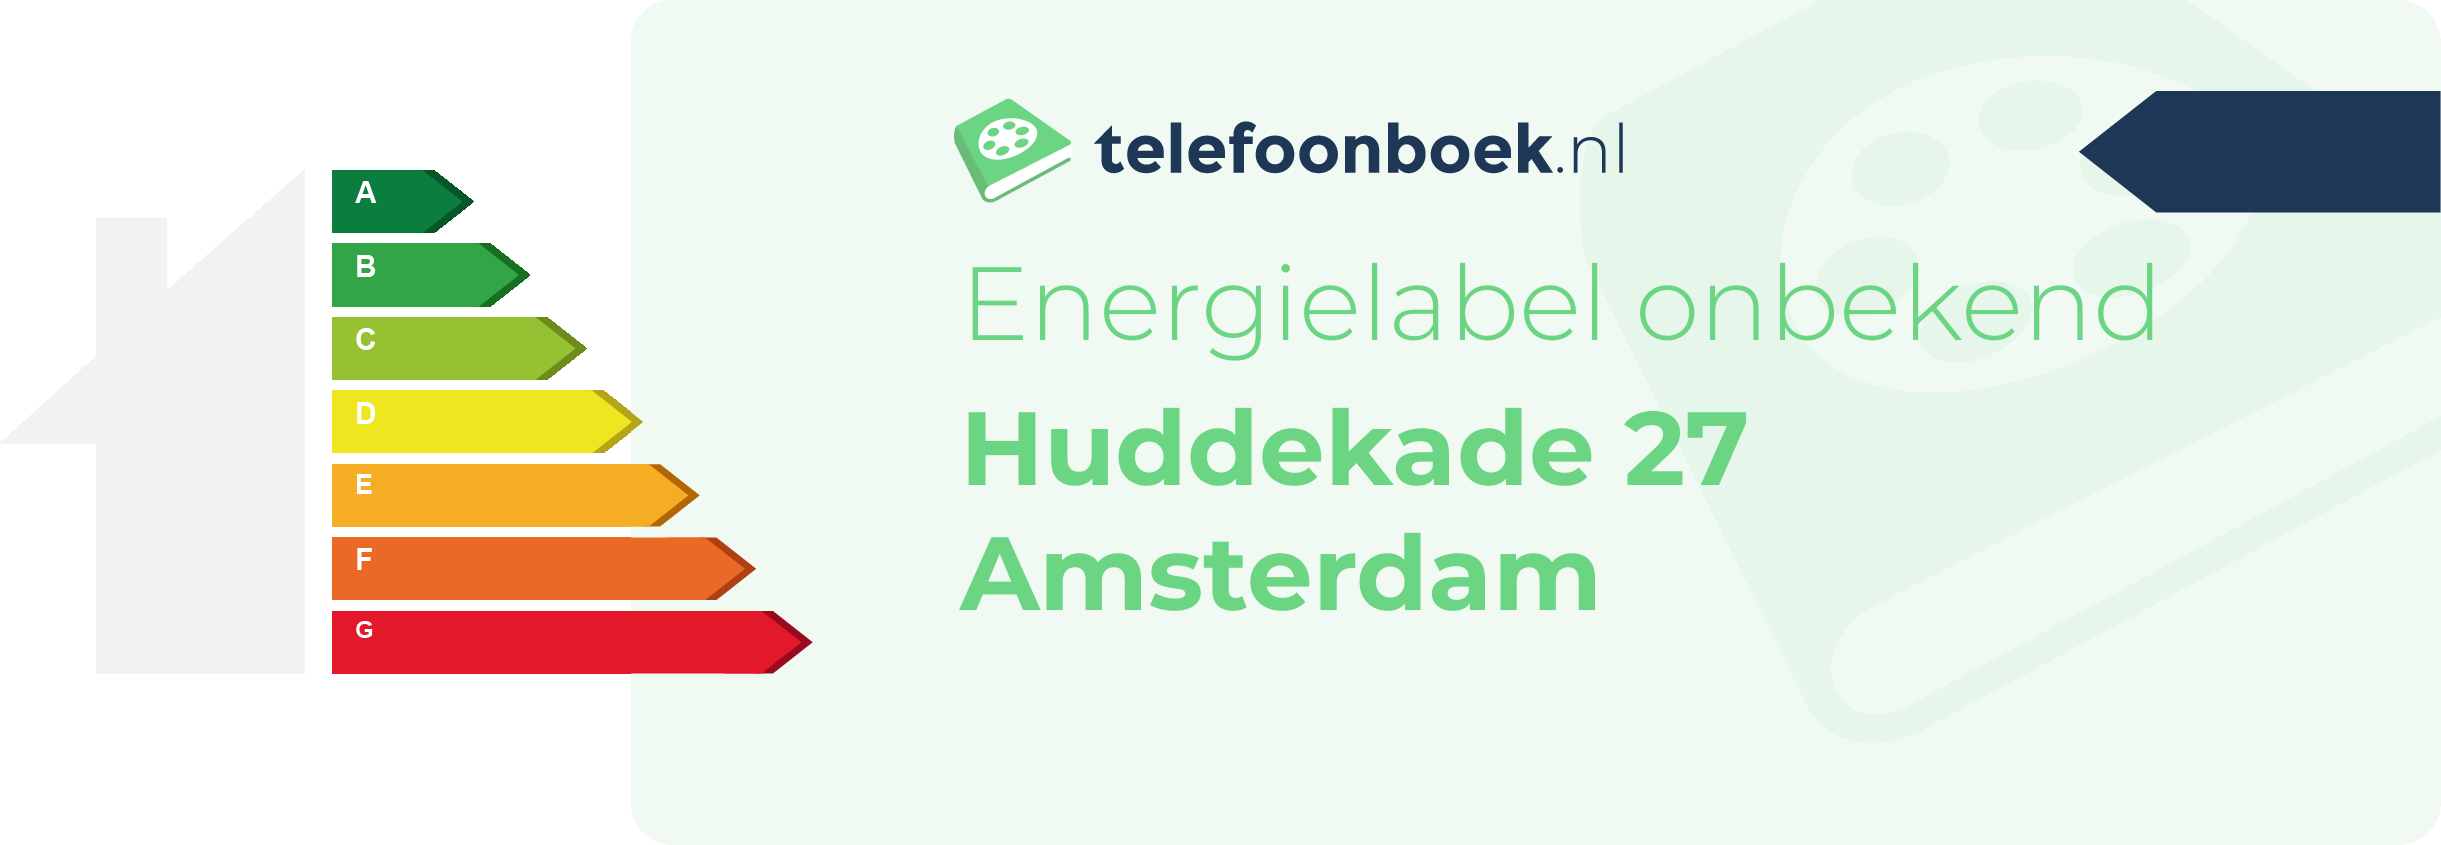 Energielabel Huddekade 27 Amsterdam